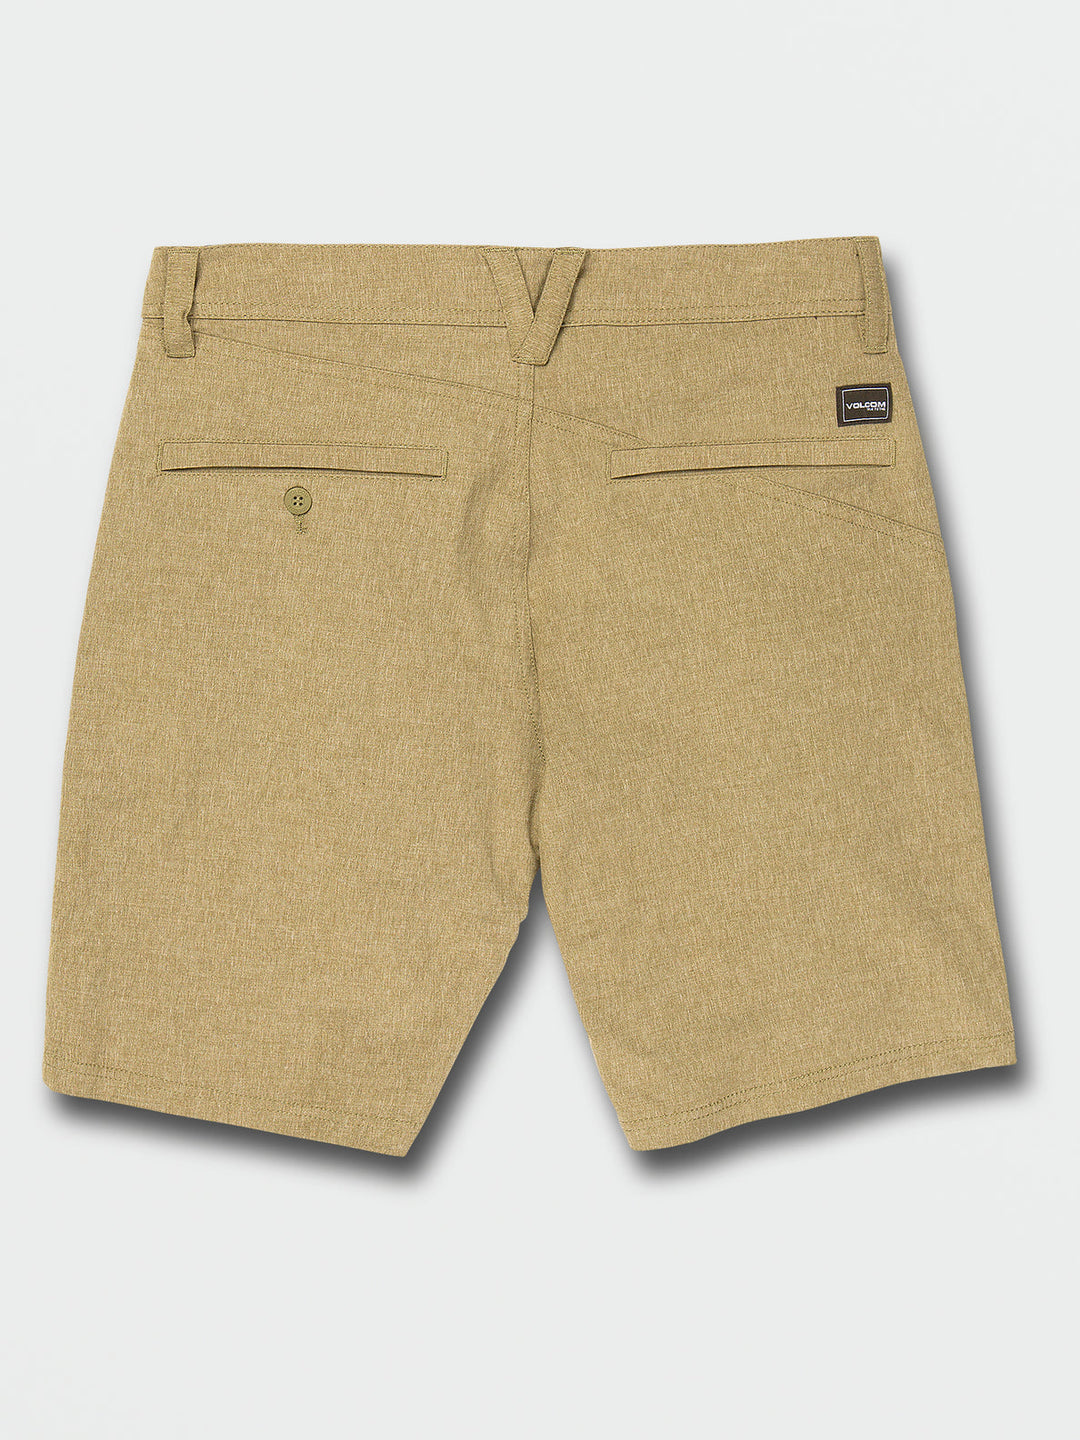 Volcom Frickin Cross Shred Static Shorts - Dark Khaki - Sun Diego Boardshop